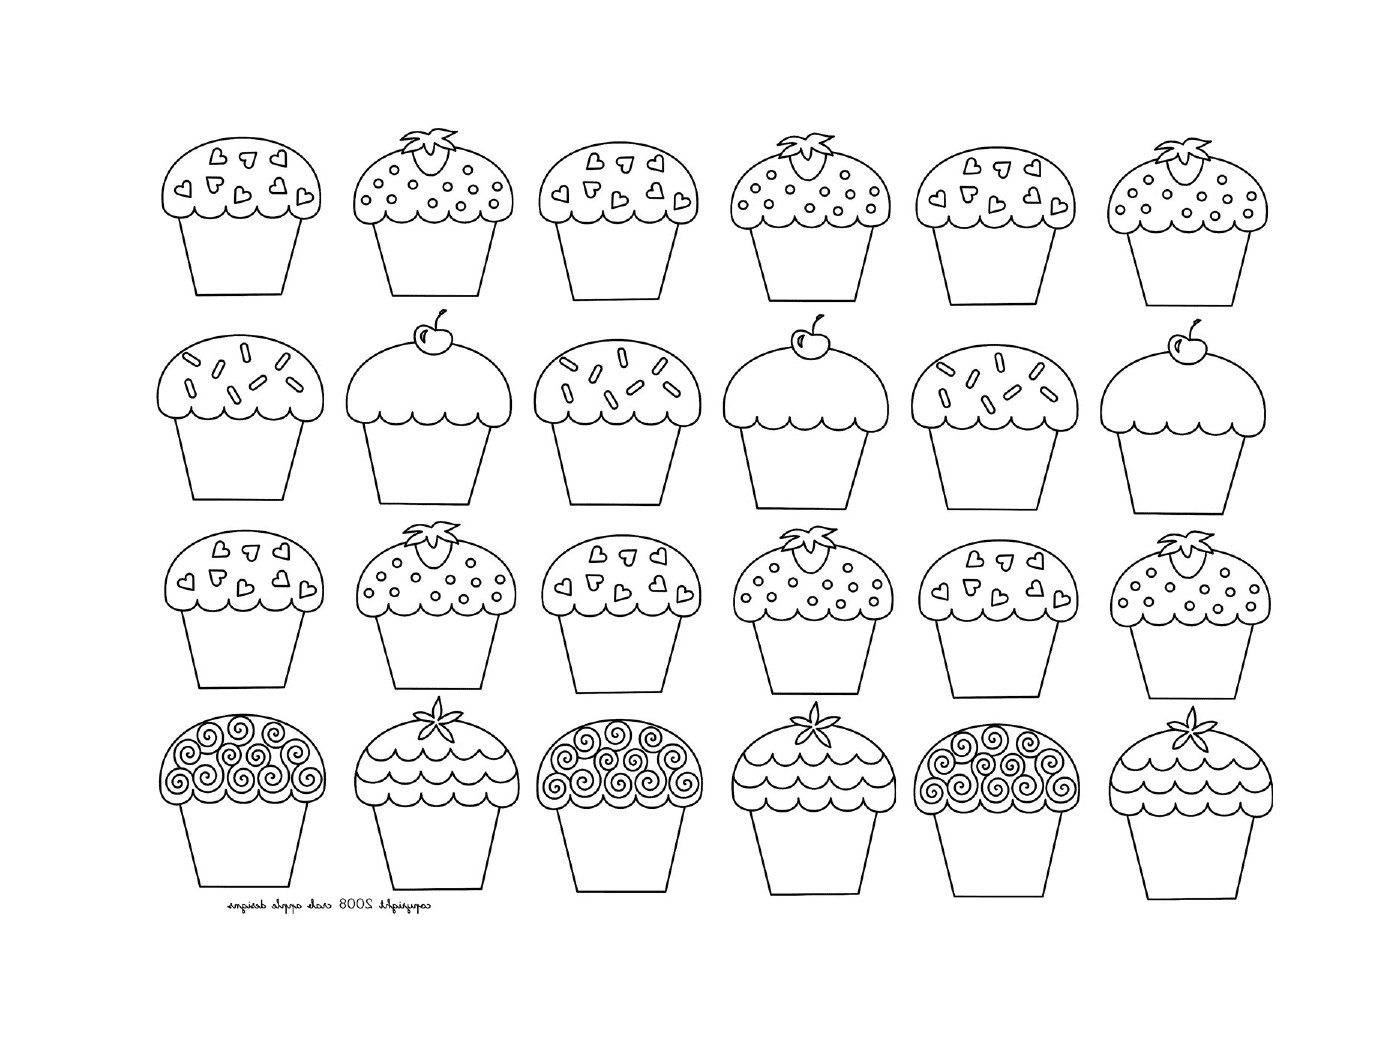  Мозаика детских кексов разного типа 